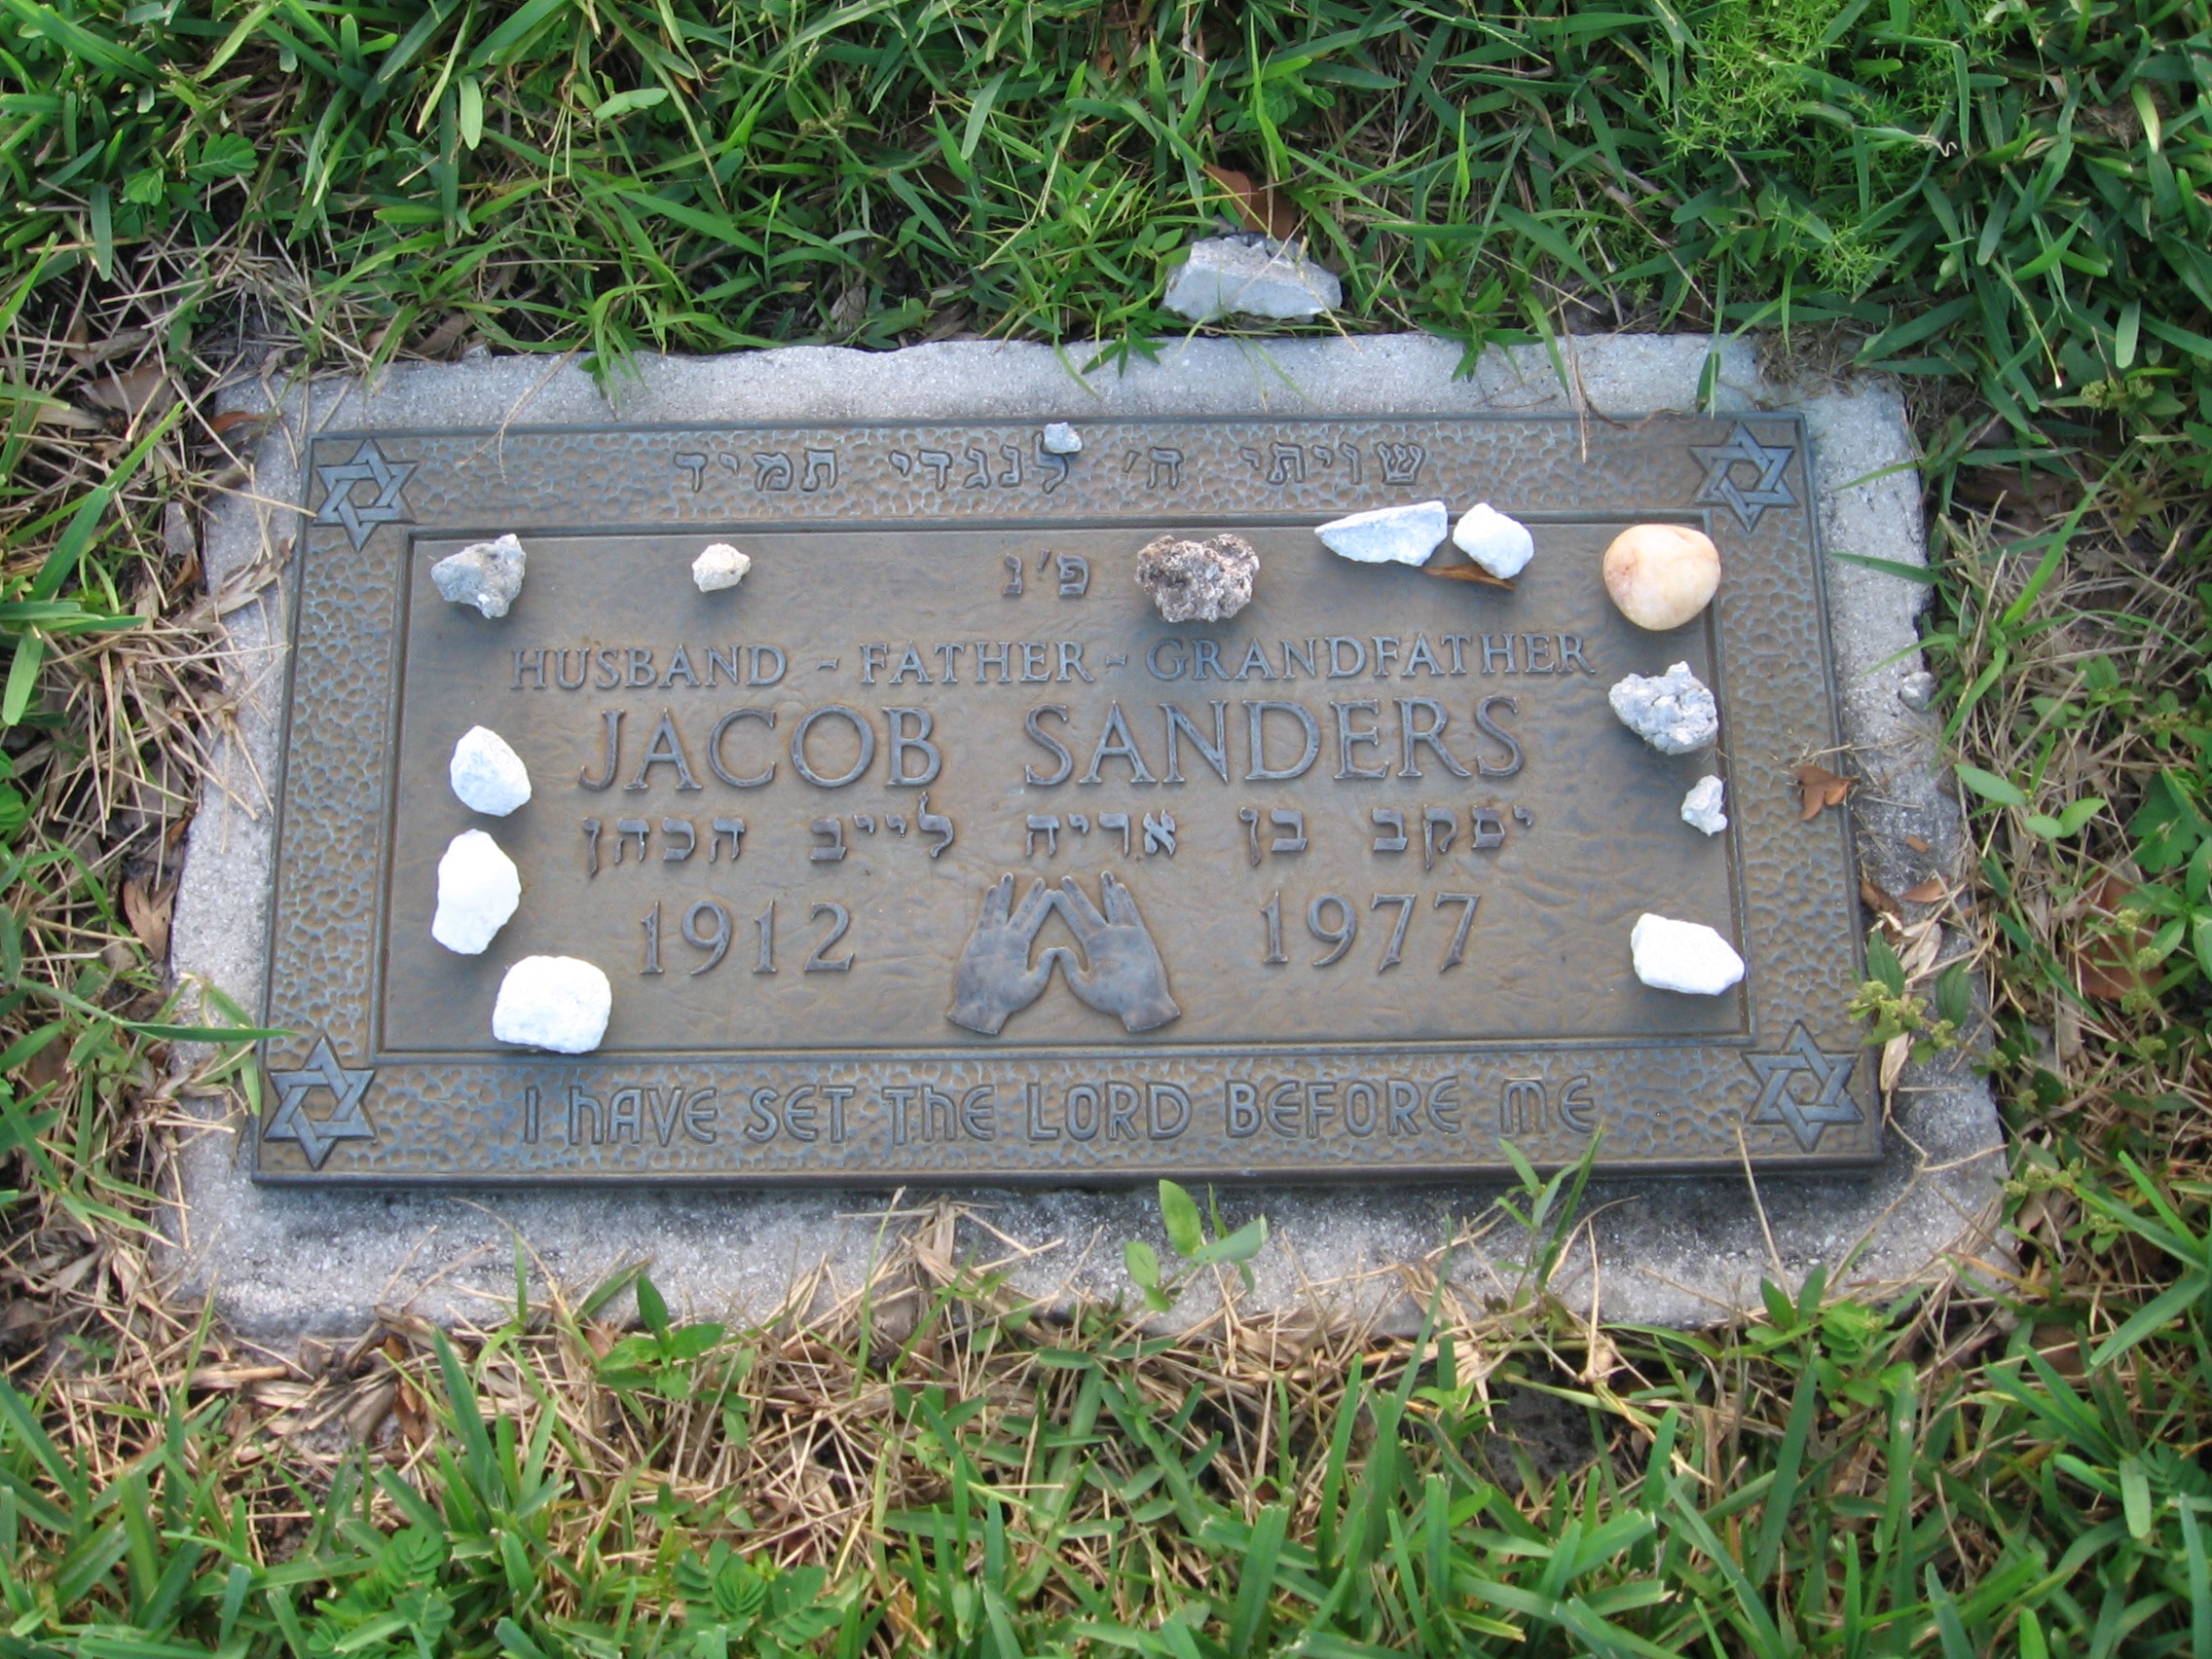 Jacob Sanders